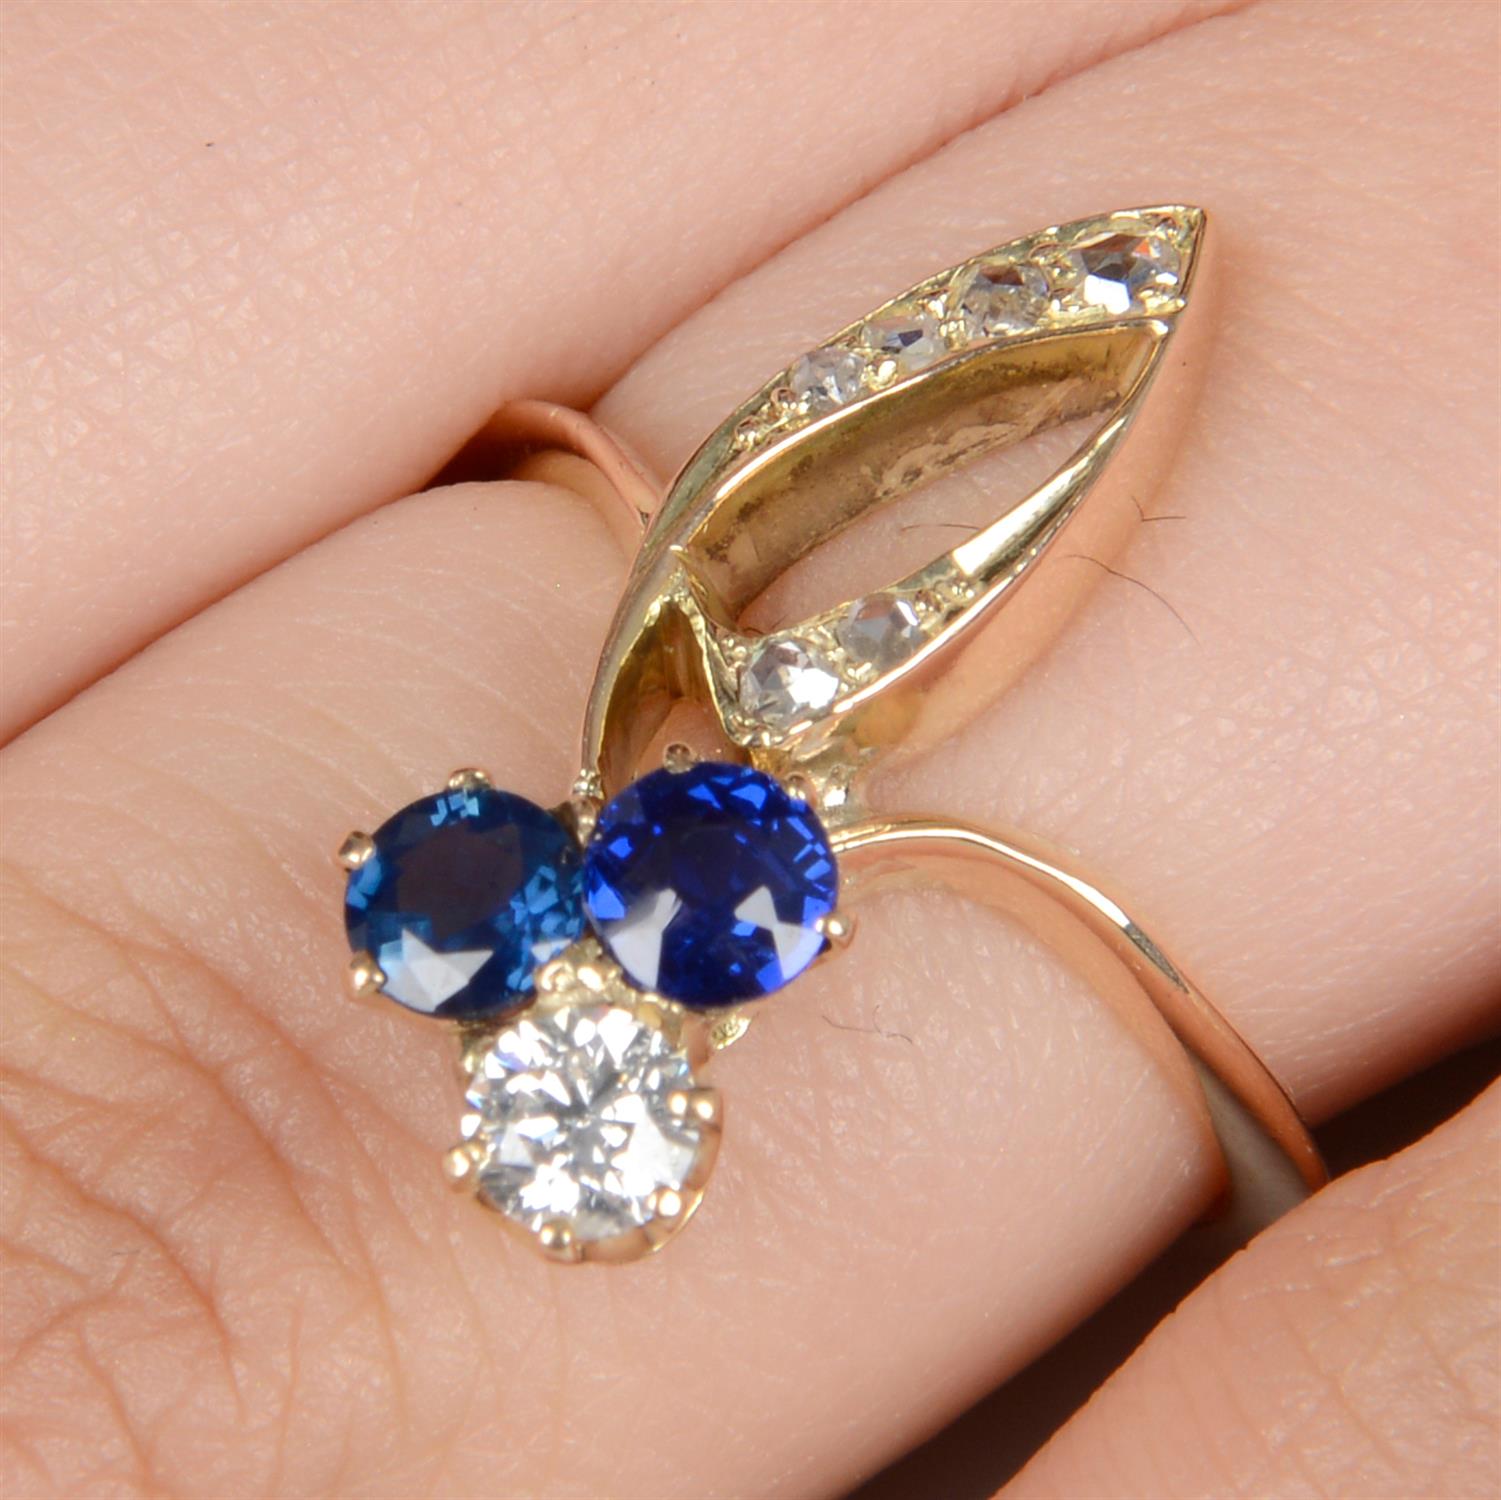 Russian Art Nouveau gold diamond and sapphire ring